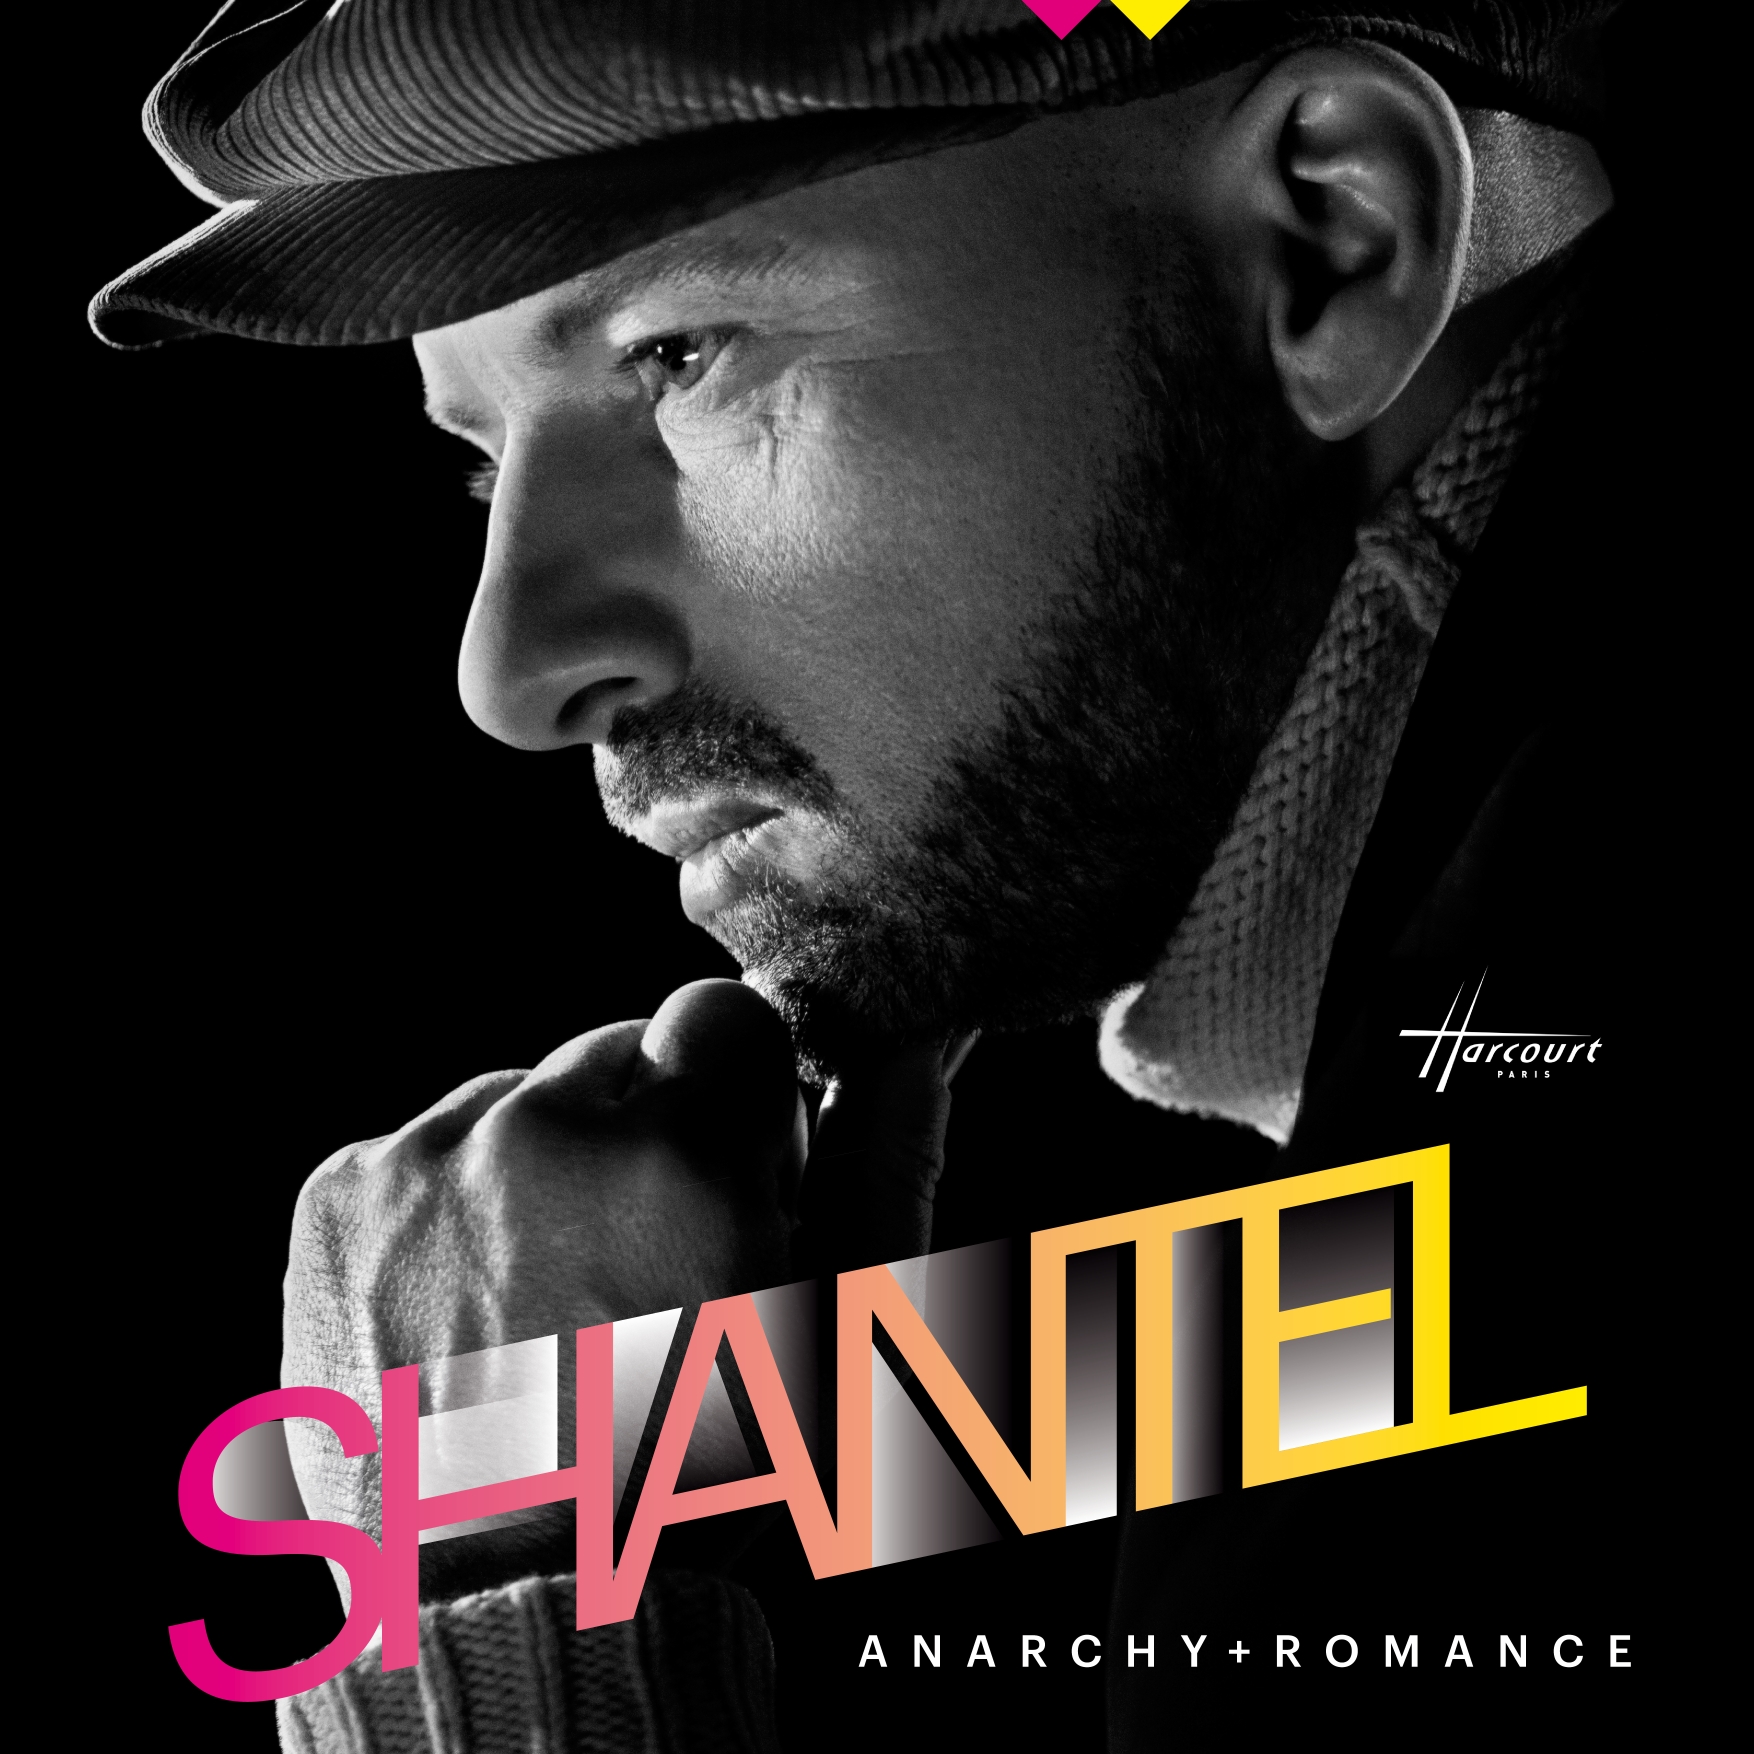 Shantel- Anarchy + Romance